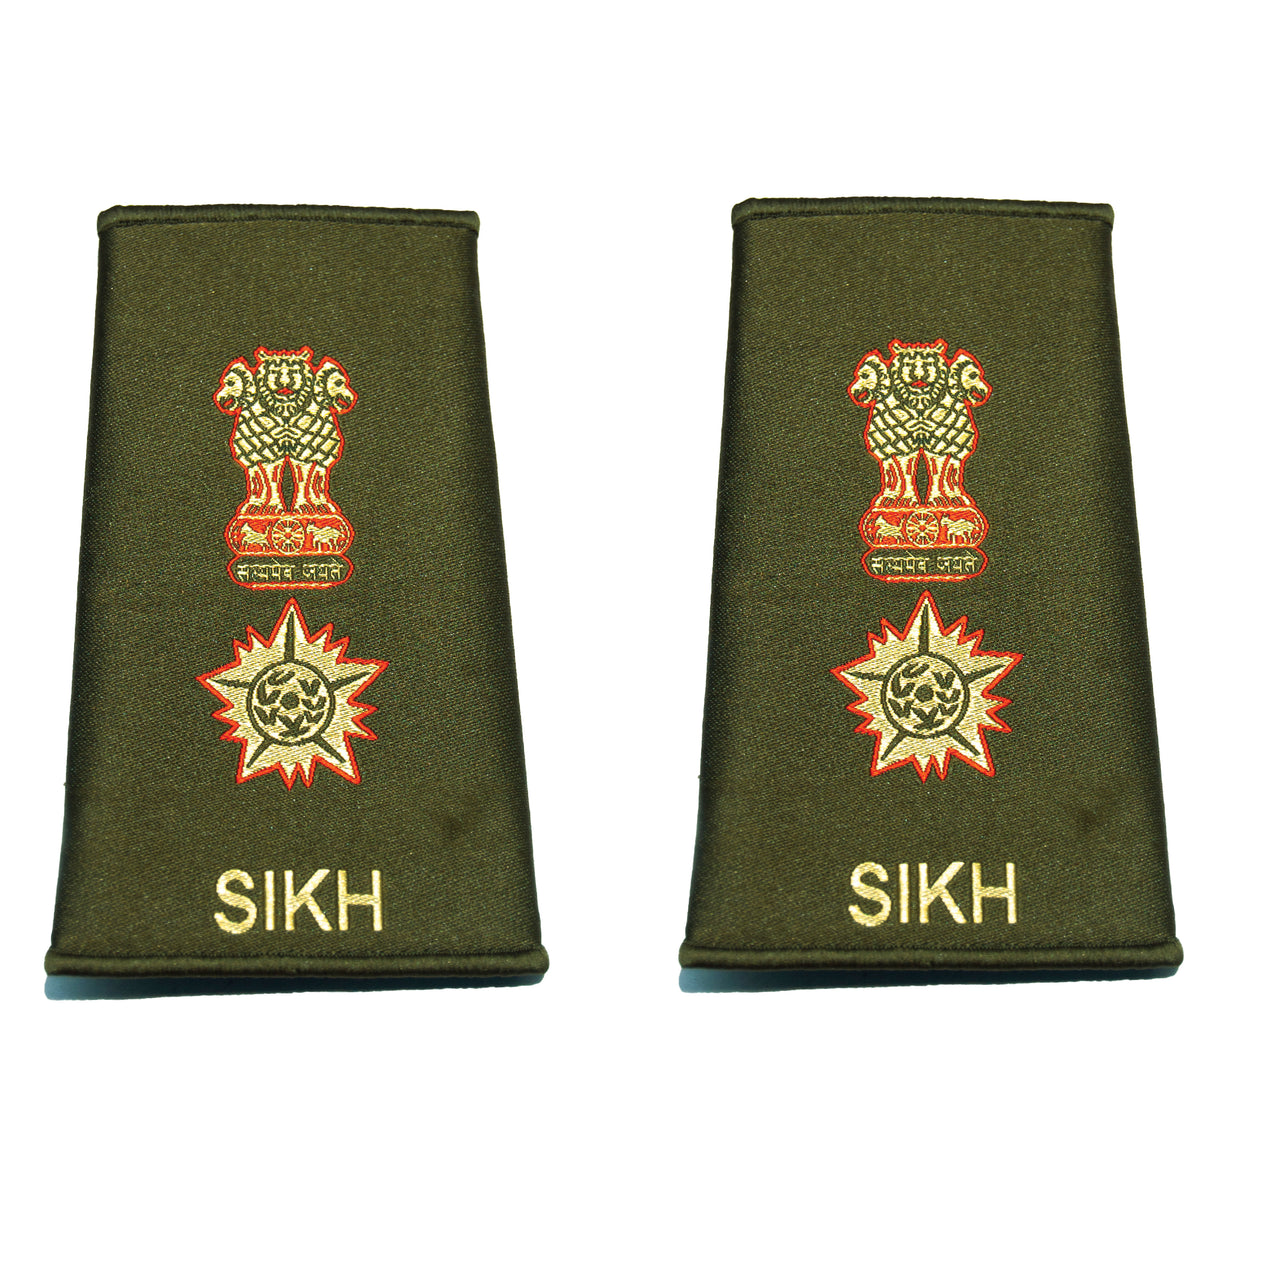 Indian Army Rank Epaulettes - Sikh Regiment